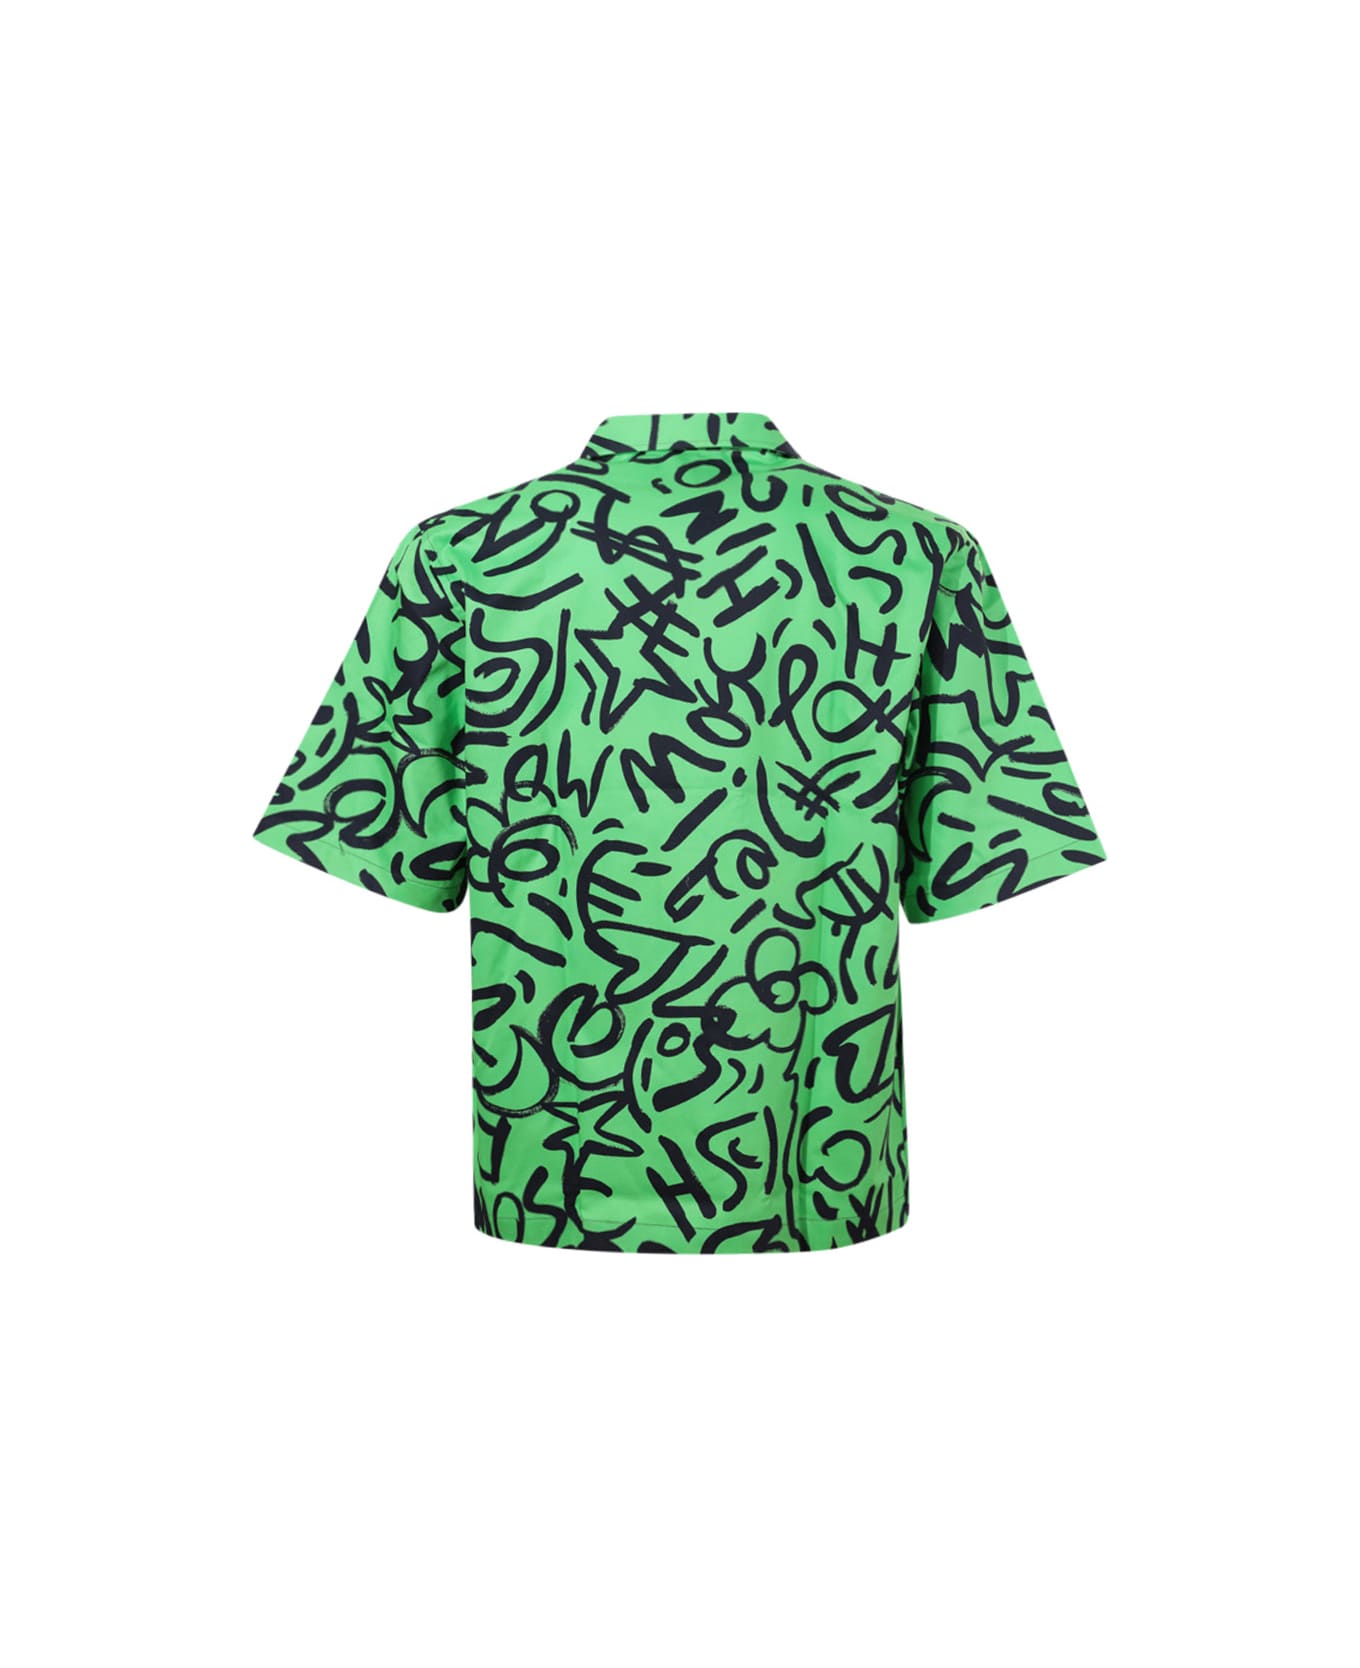 Moschino Shirt - Green